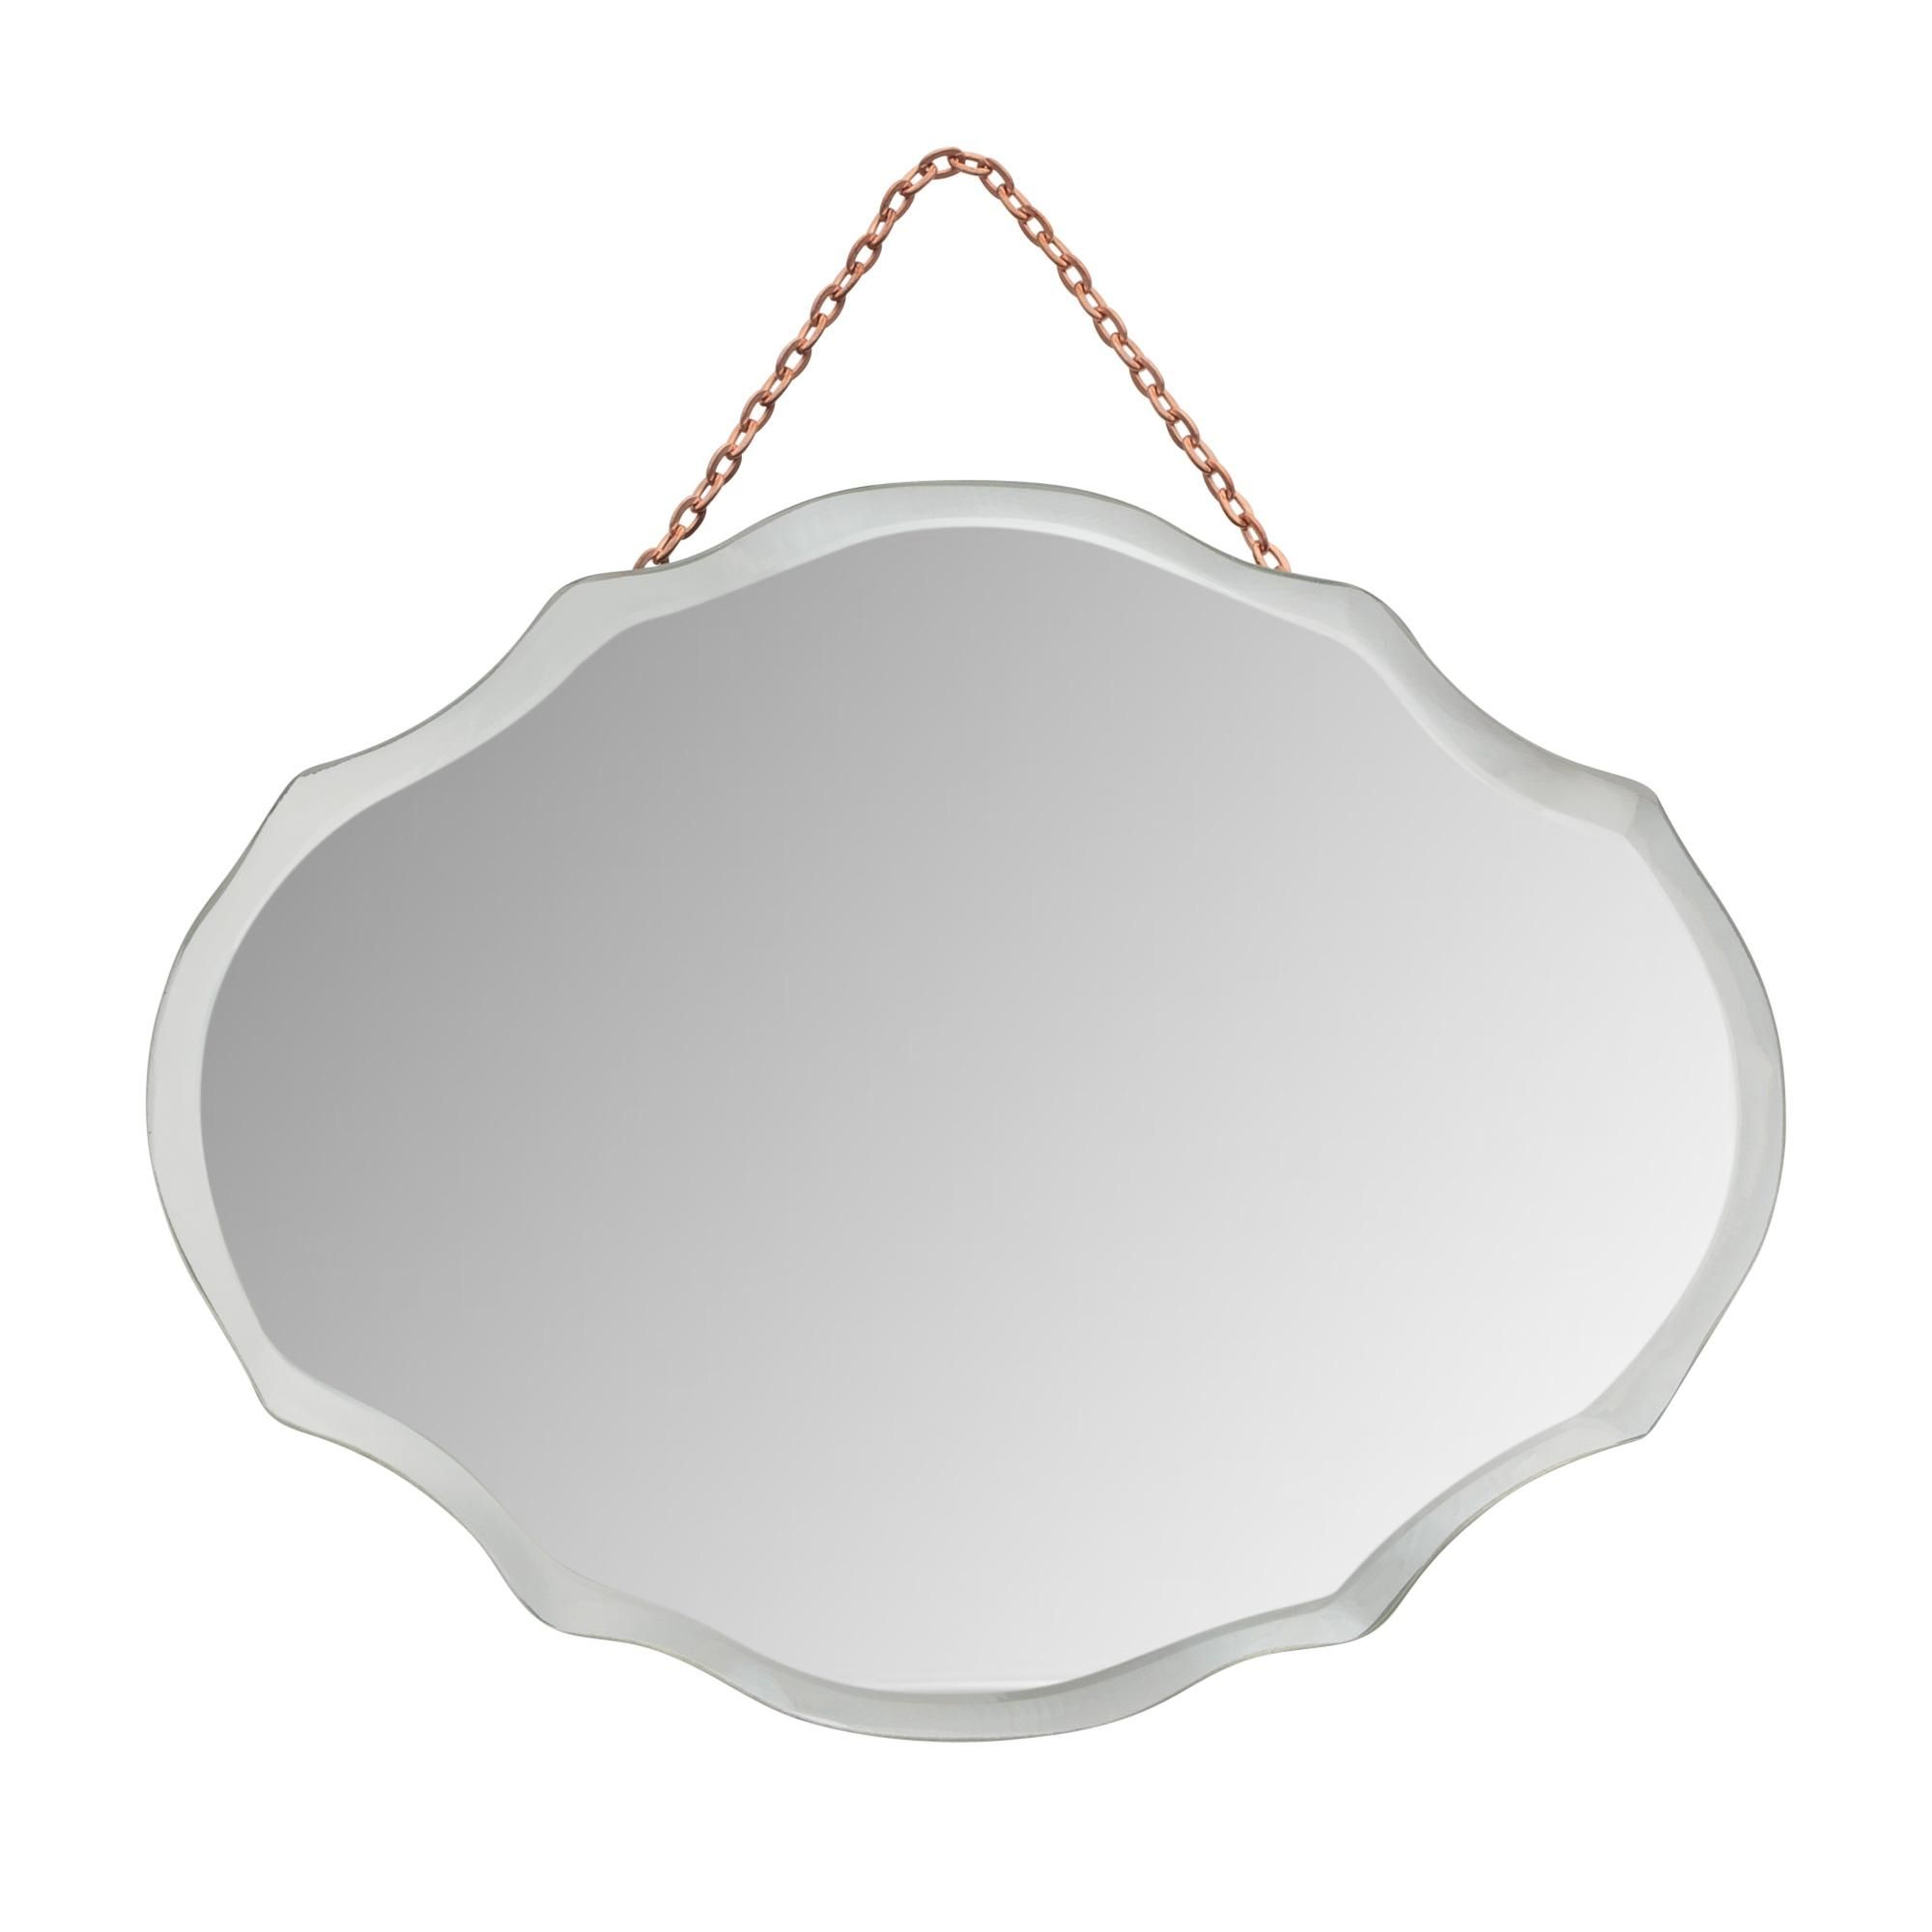 Mini Oval Art Deco Mirror | Oliver Bonas Regarding Art Deco Mirrors (View 20 of 20)